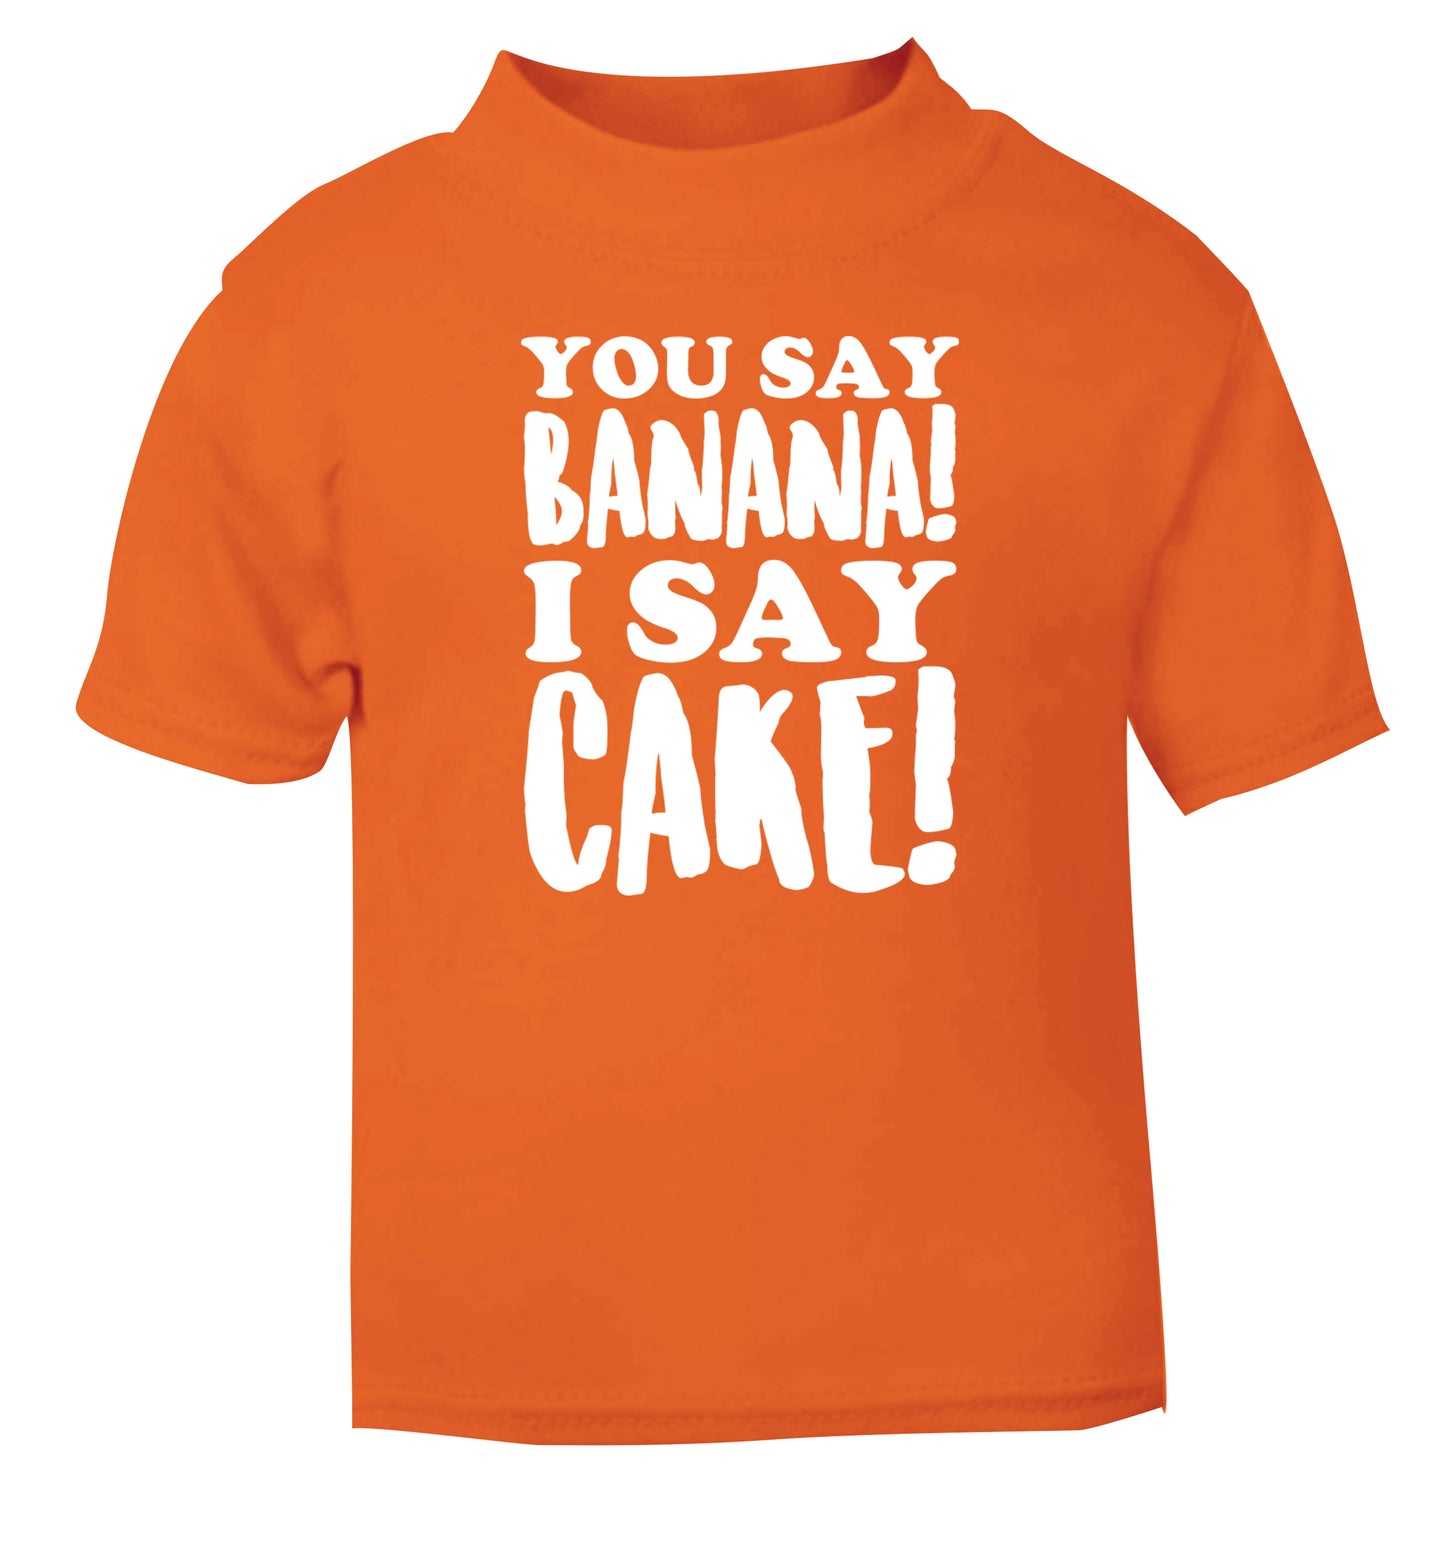 You say banana I say cake! orange Baby Toddler Tshirt 2 Years